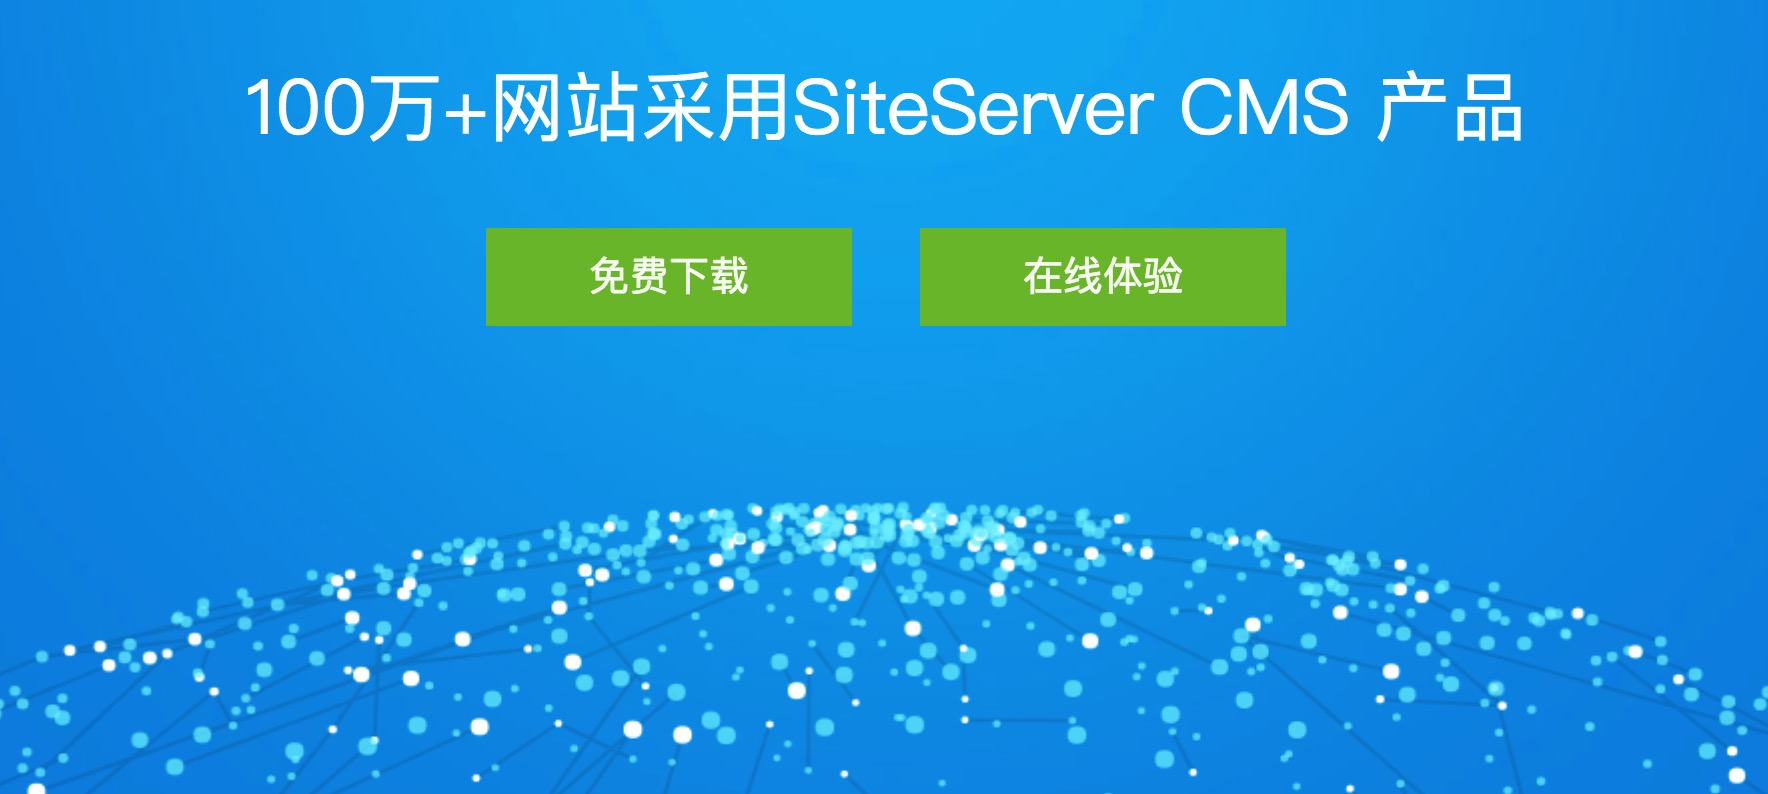 SiteServer CMS 产品特性 - 图1